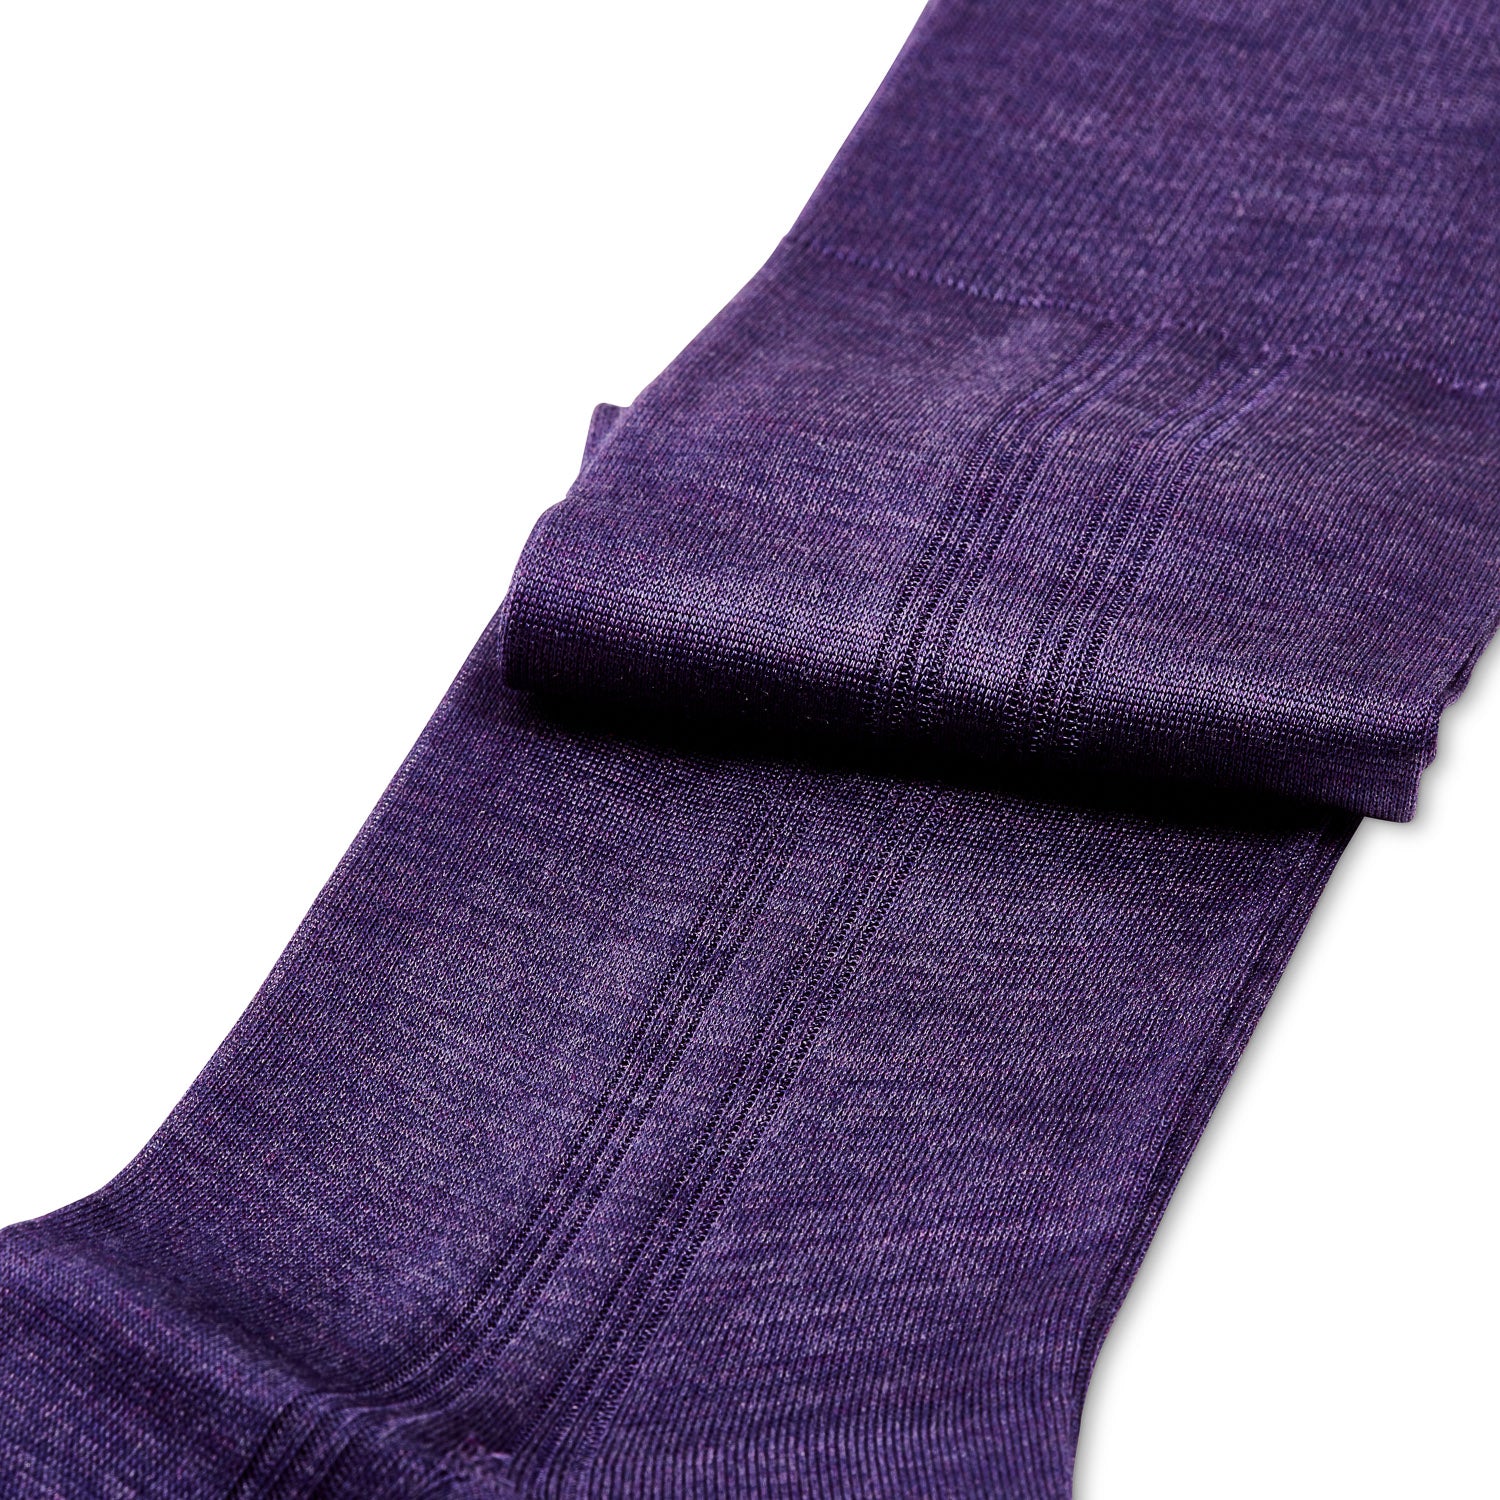 A pair of Sovereign Grade Super-Fine 100% Silk OTC Socks by KirbyAllison.com on a white background.